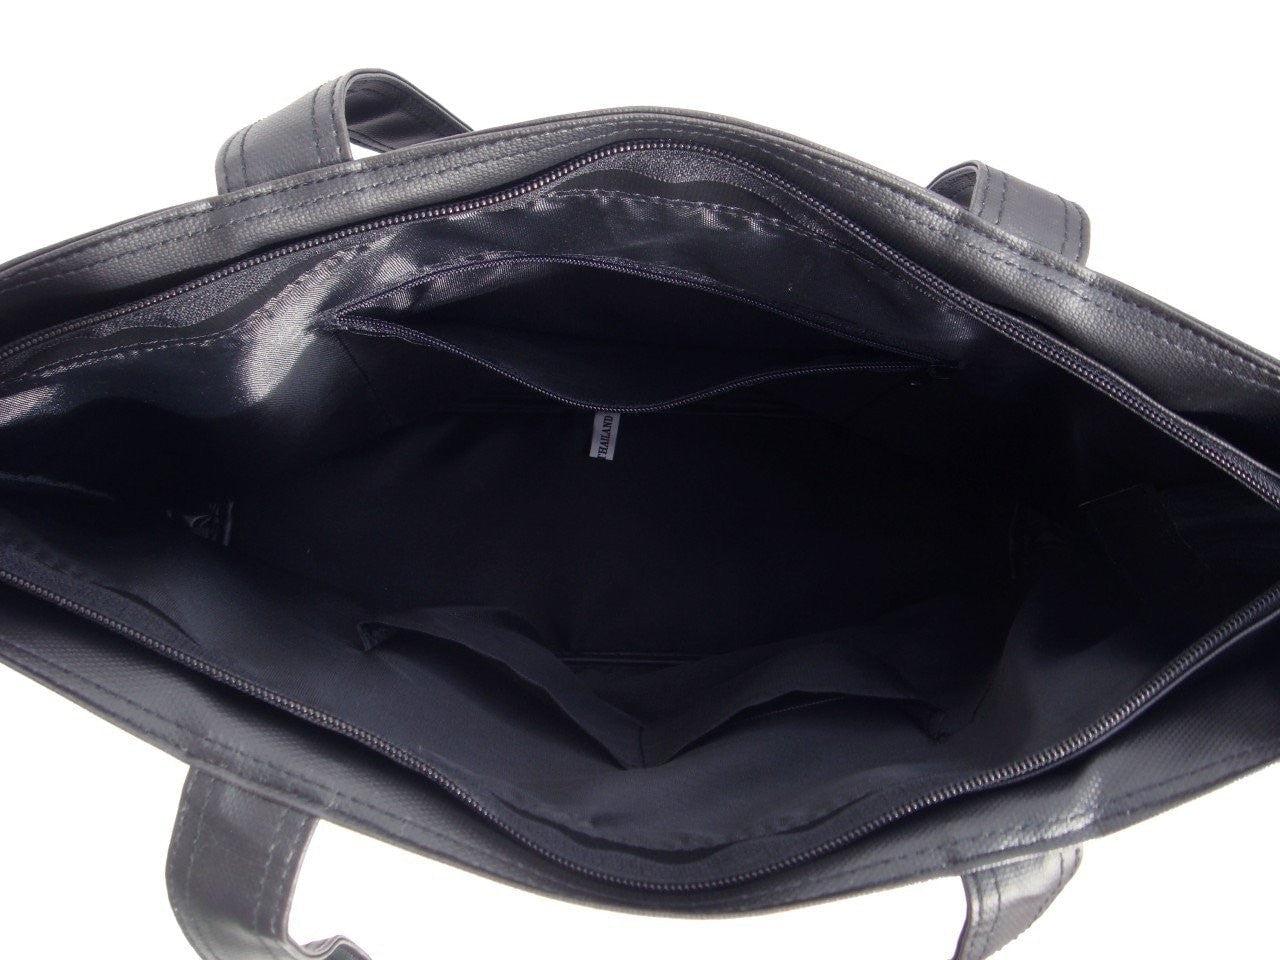 Audrey Hepburn Tote Bag with Signature - SilverMania925